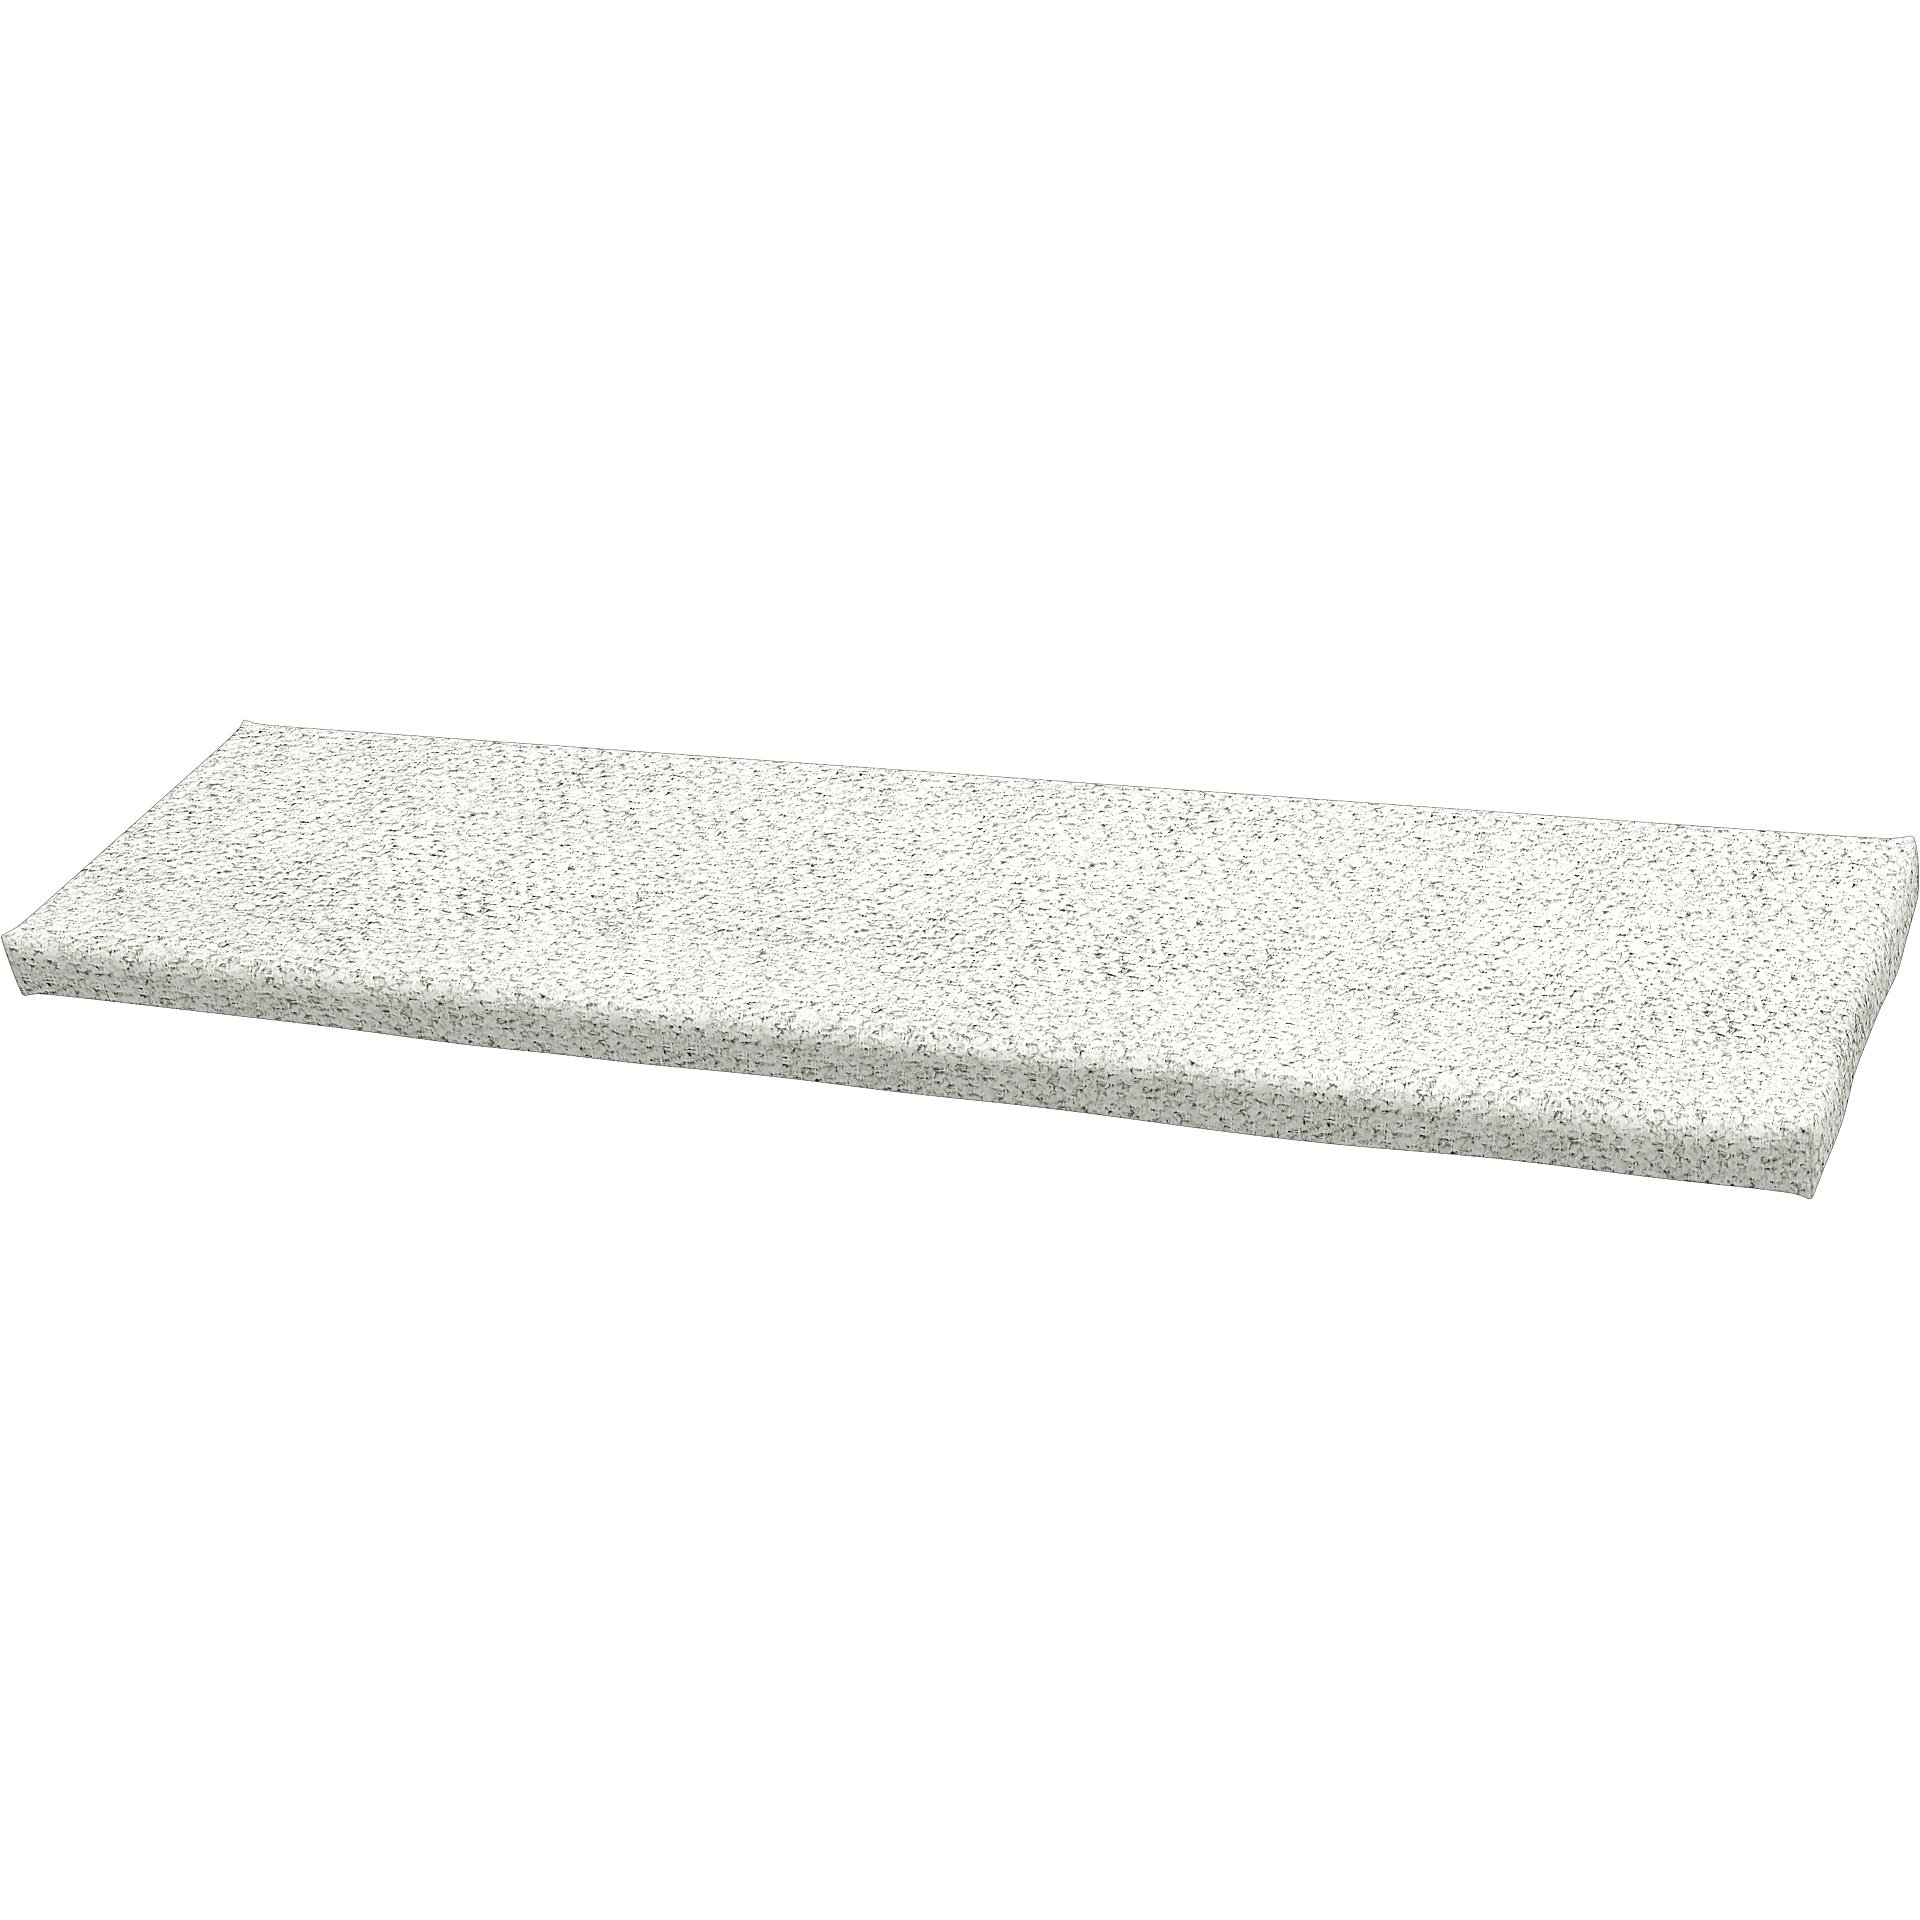 IKEA - Universal bench cushion cover 120x35x3,5 cm, Ivory, Boucle & Texture - Bemz